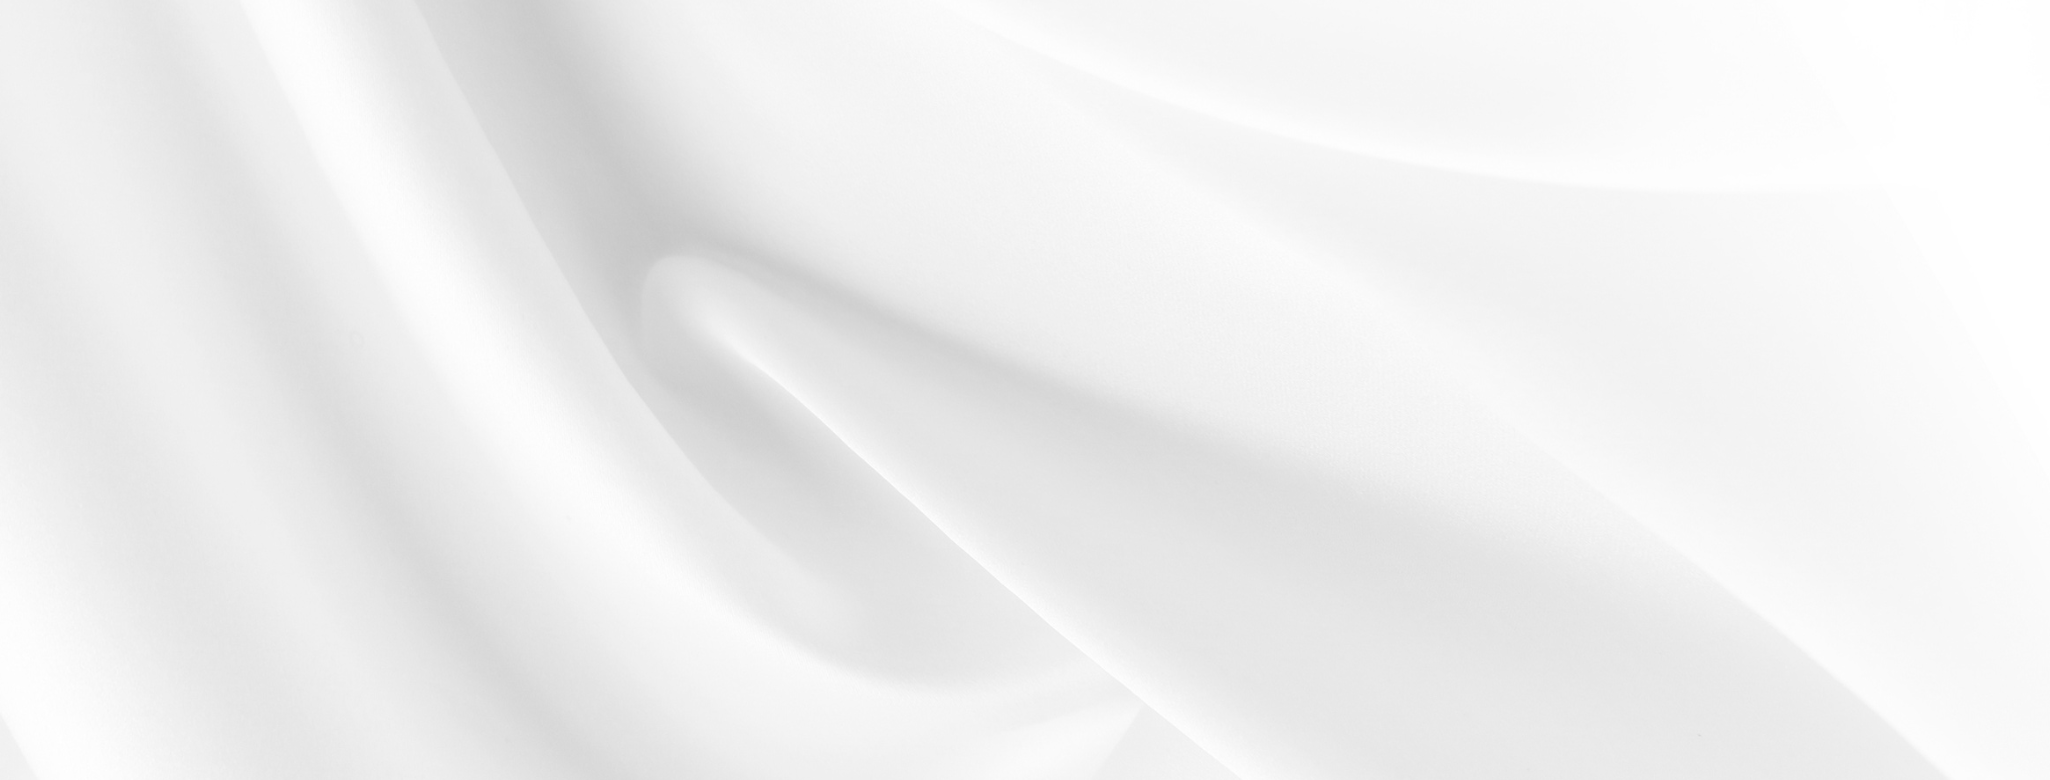 An elegant white photo that resembles a sheet blowing the breeze.